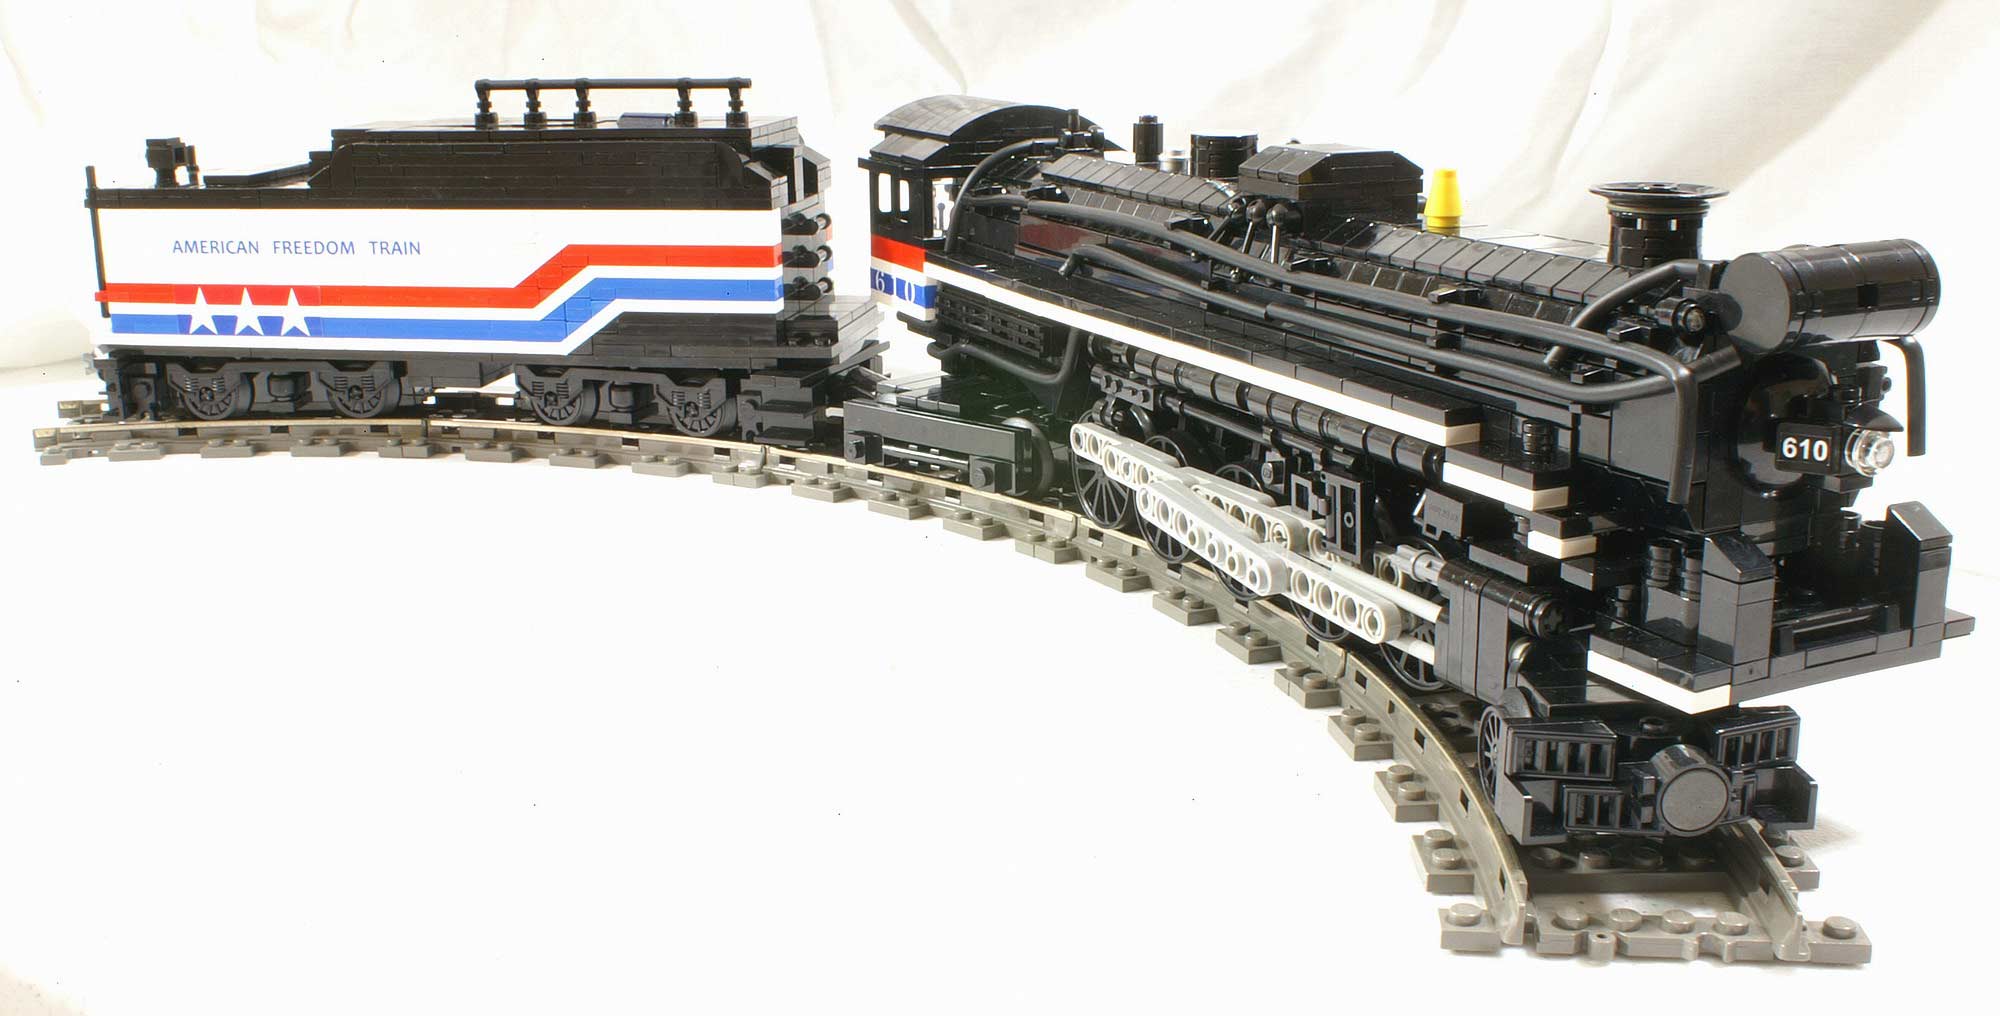 sava-american-freedom-train-lego-train-steam-locomotive-610-009-1200x 